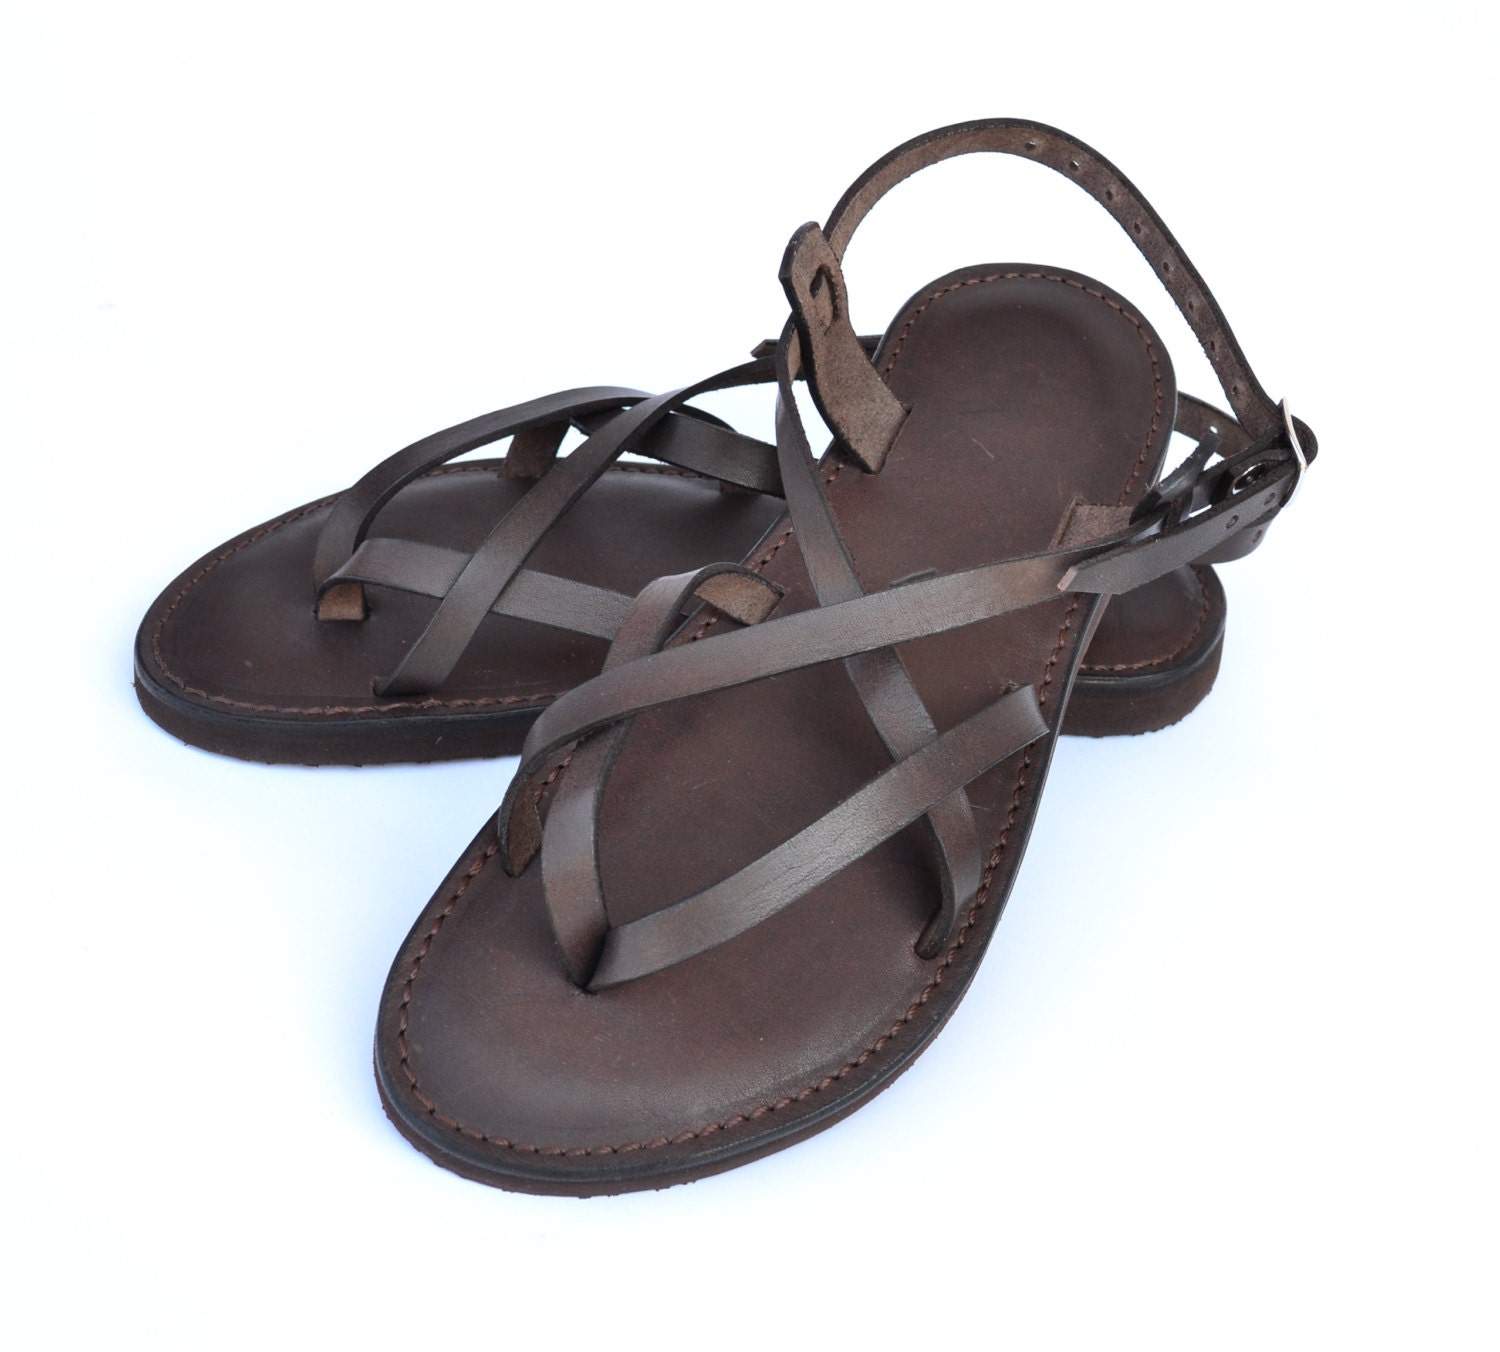 Brown leather women sandals sandals flat sandals strap